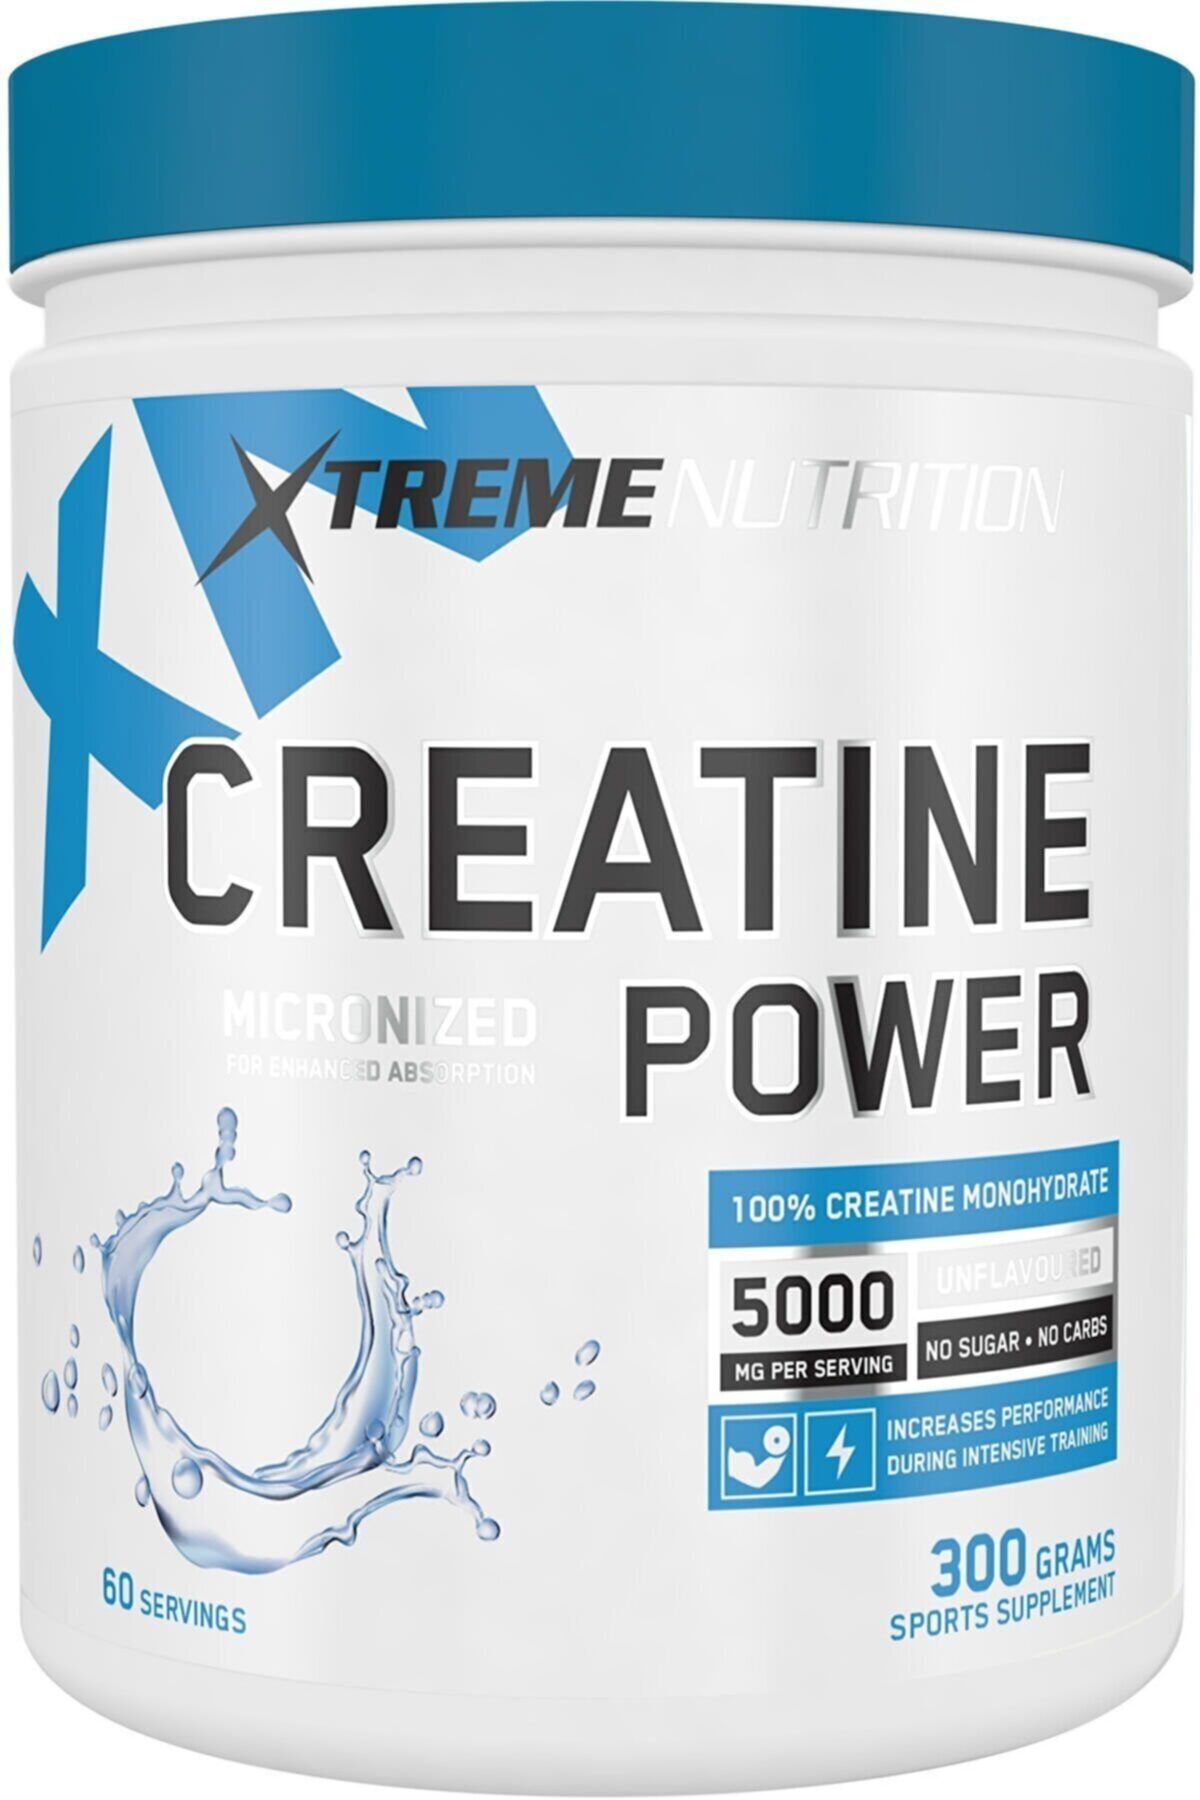 Xtreme Nutrition Xtreme Creatine